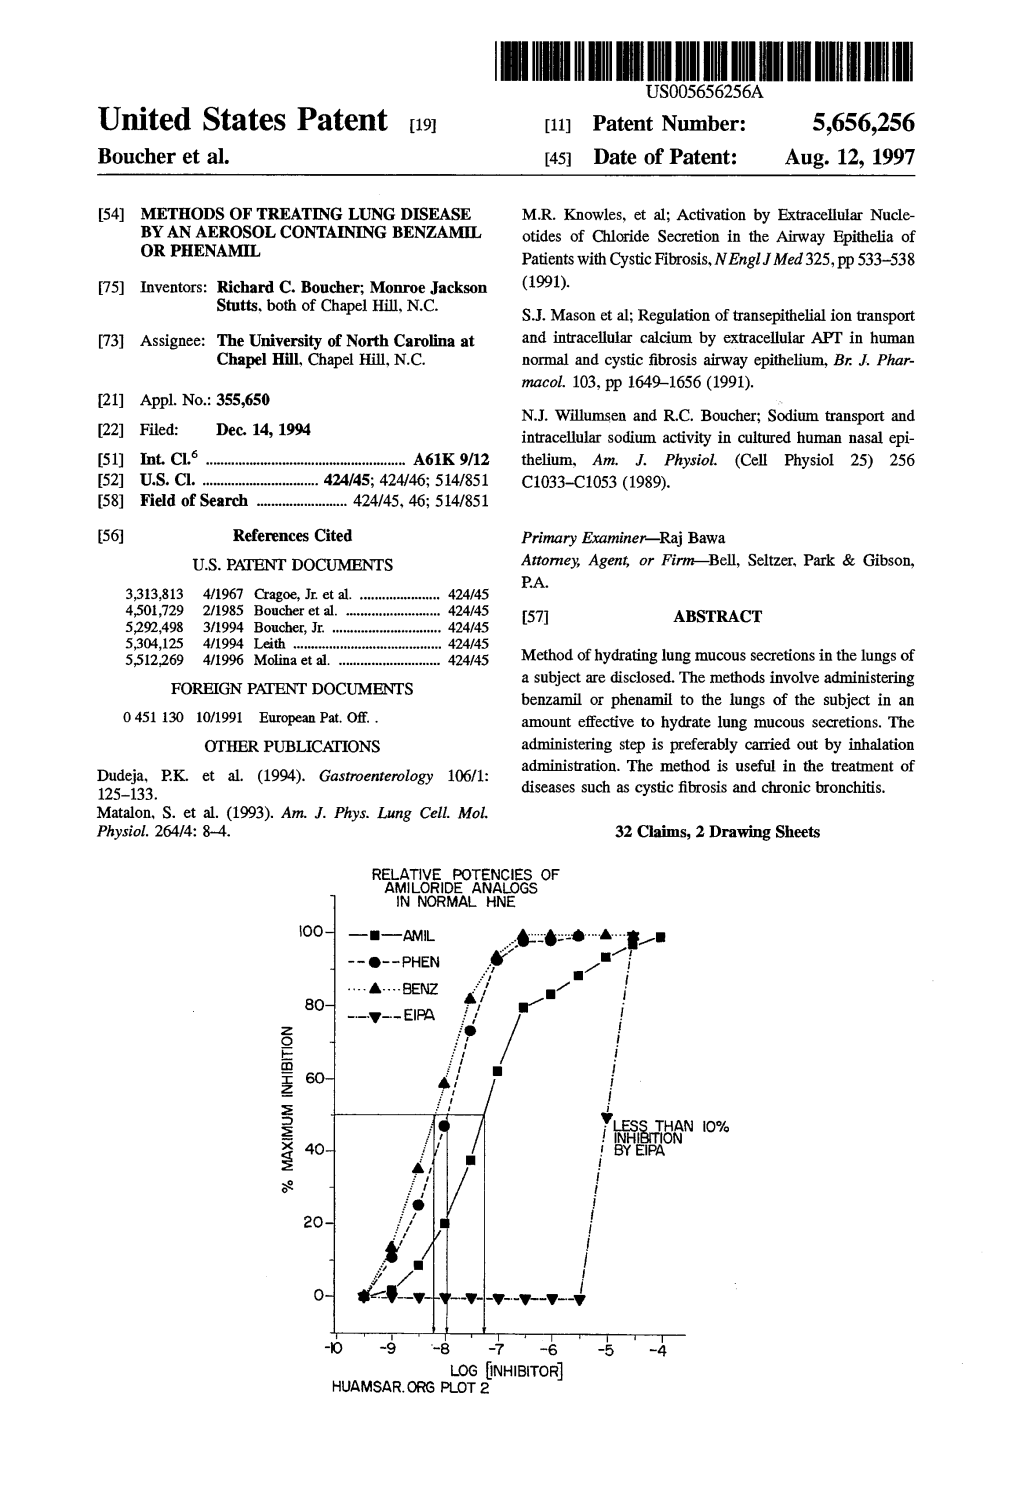 United States Patent 19 11 Patent Number: 5,656,256 Boucher Et Al